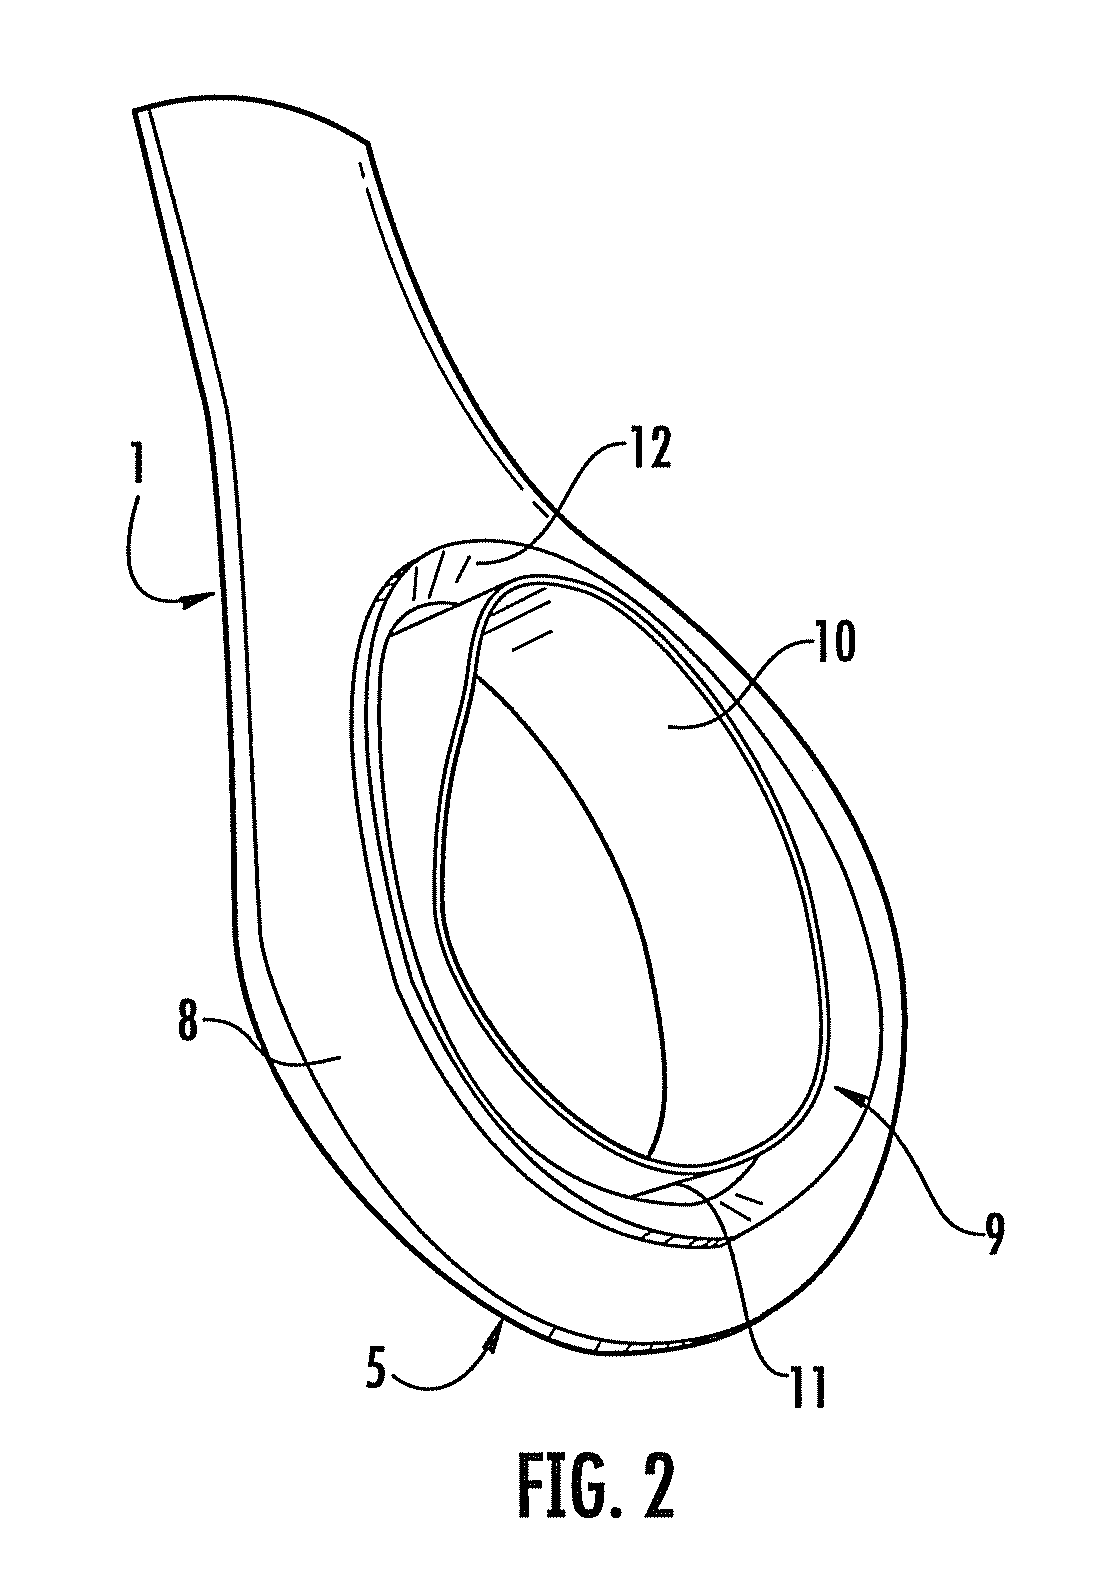 Scissors having handles with flexible rings